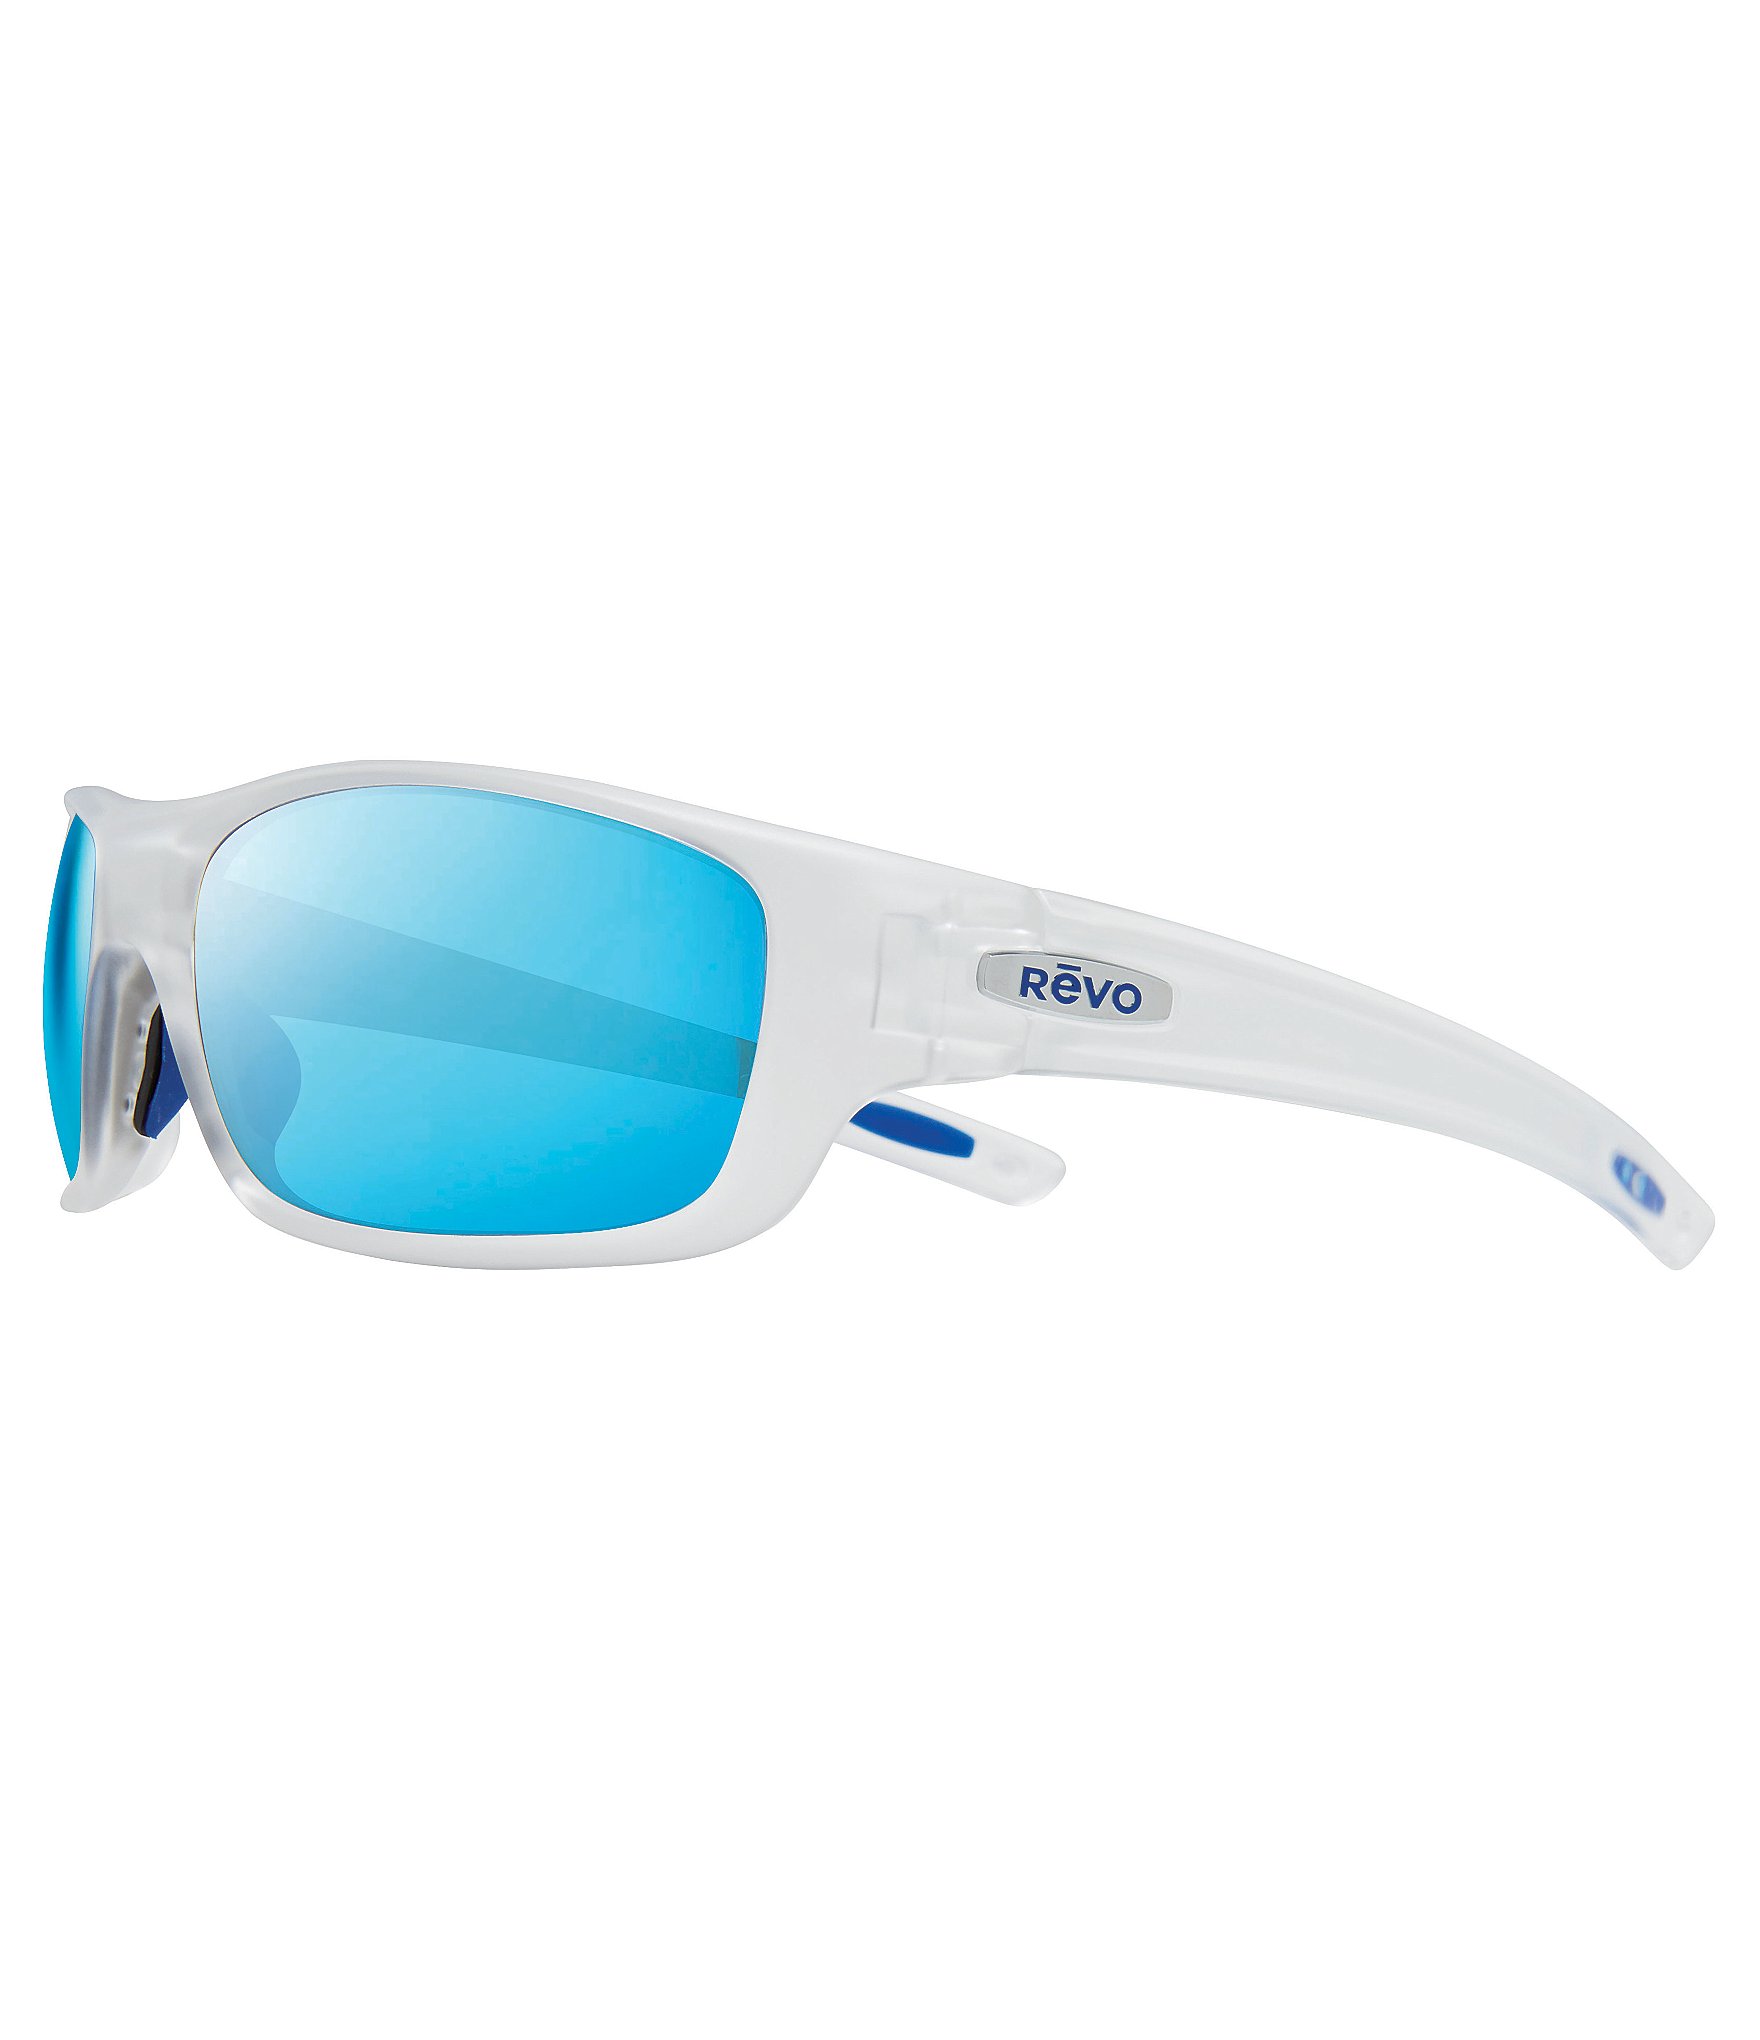 Revo Alpine Sunglasses Review! Revo Black Edition Photochromic Sunglasses -  YouTube